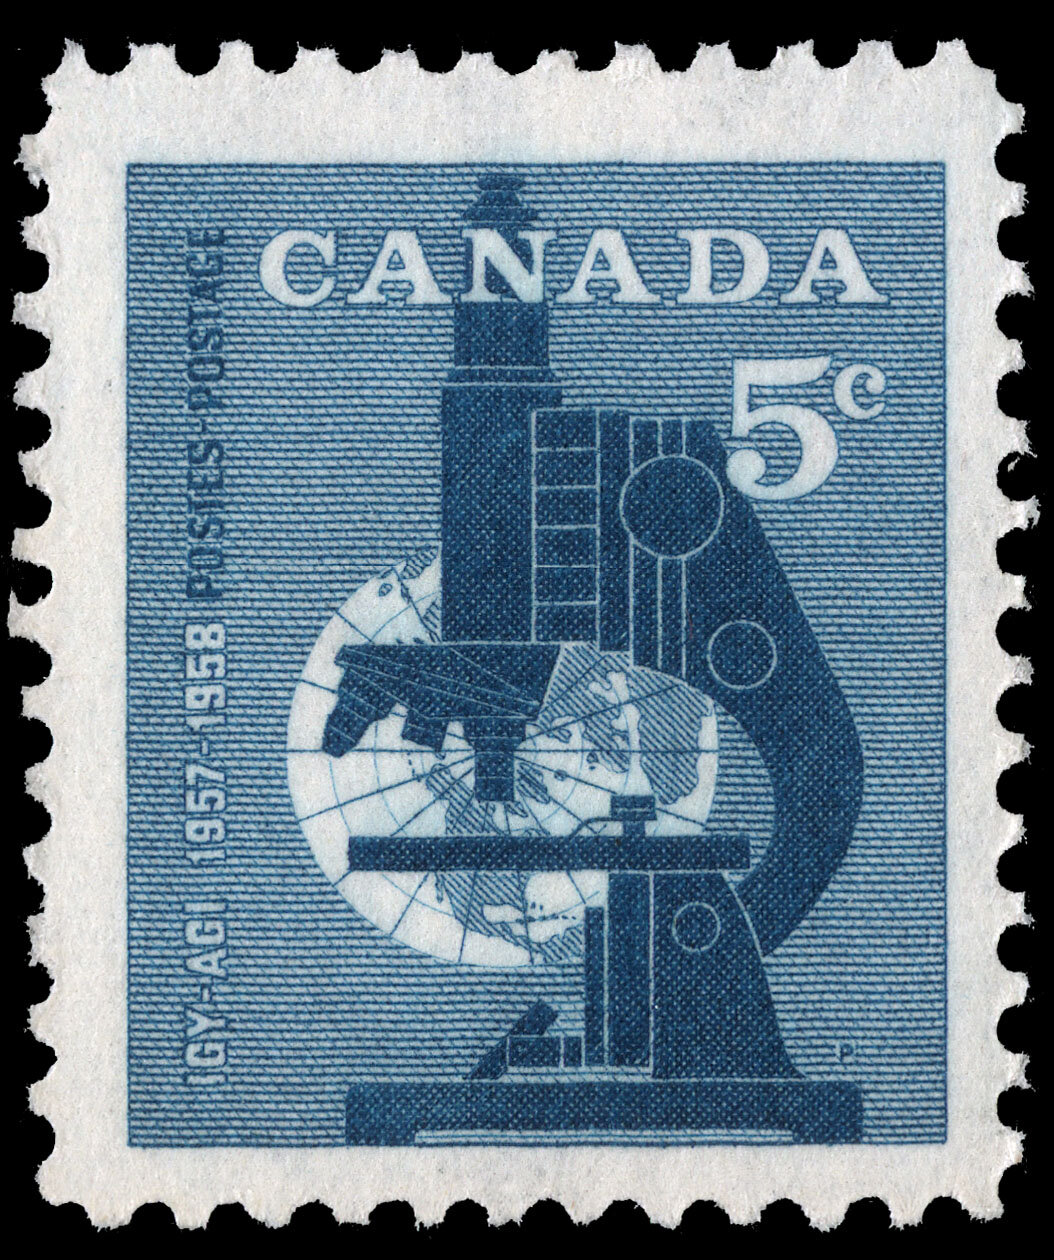 Canadian postal stamp